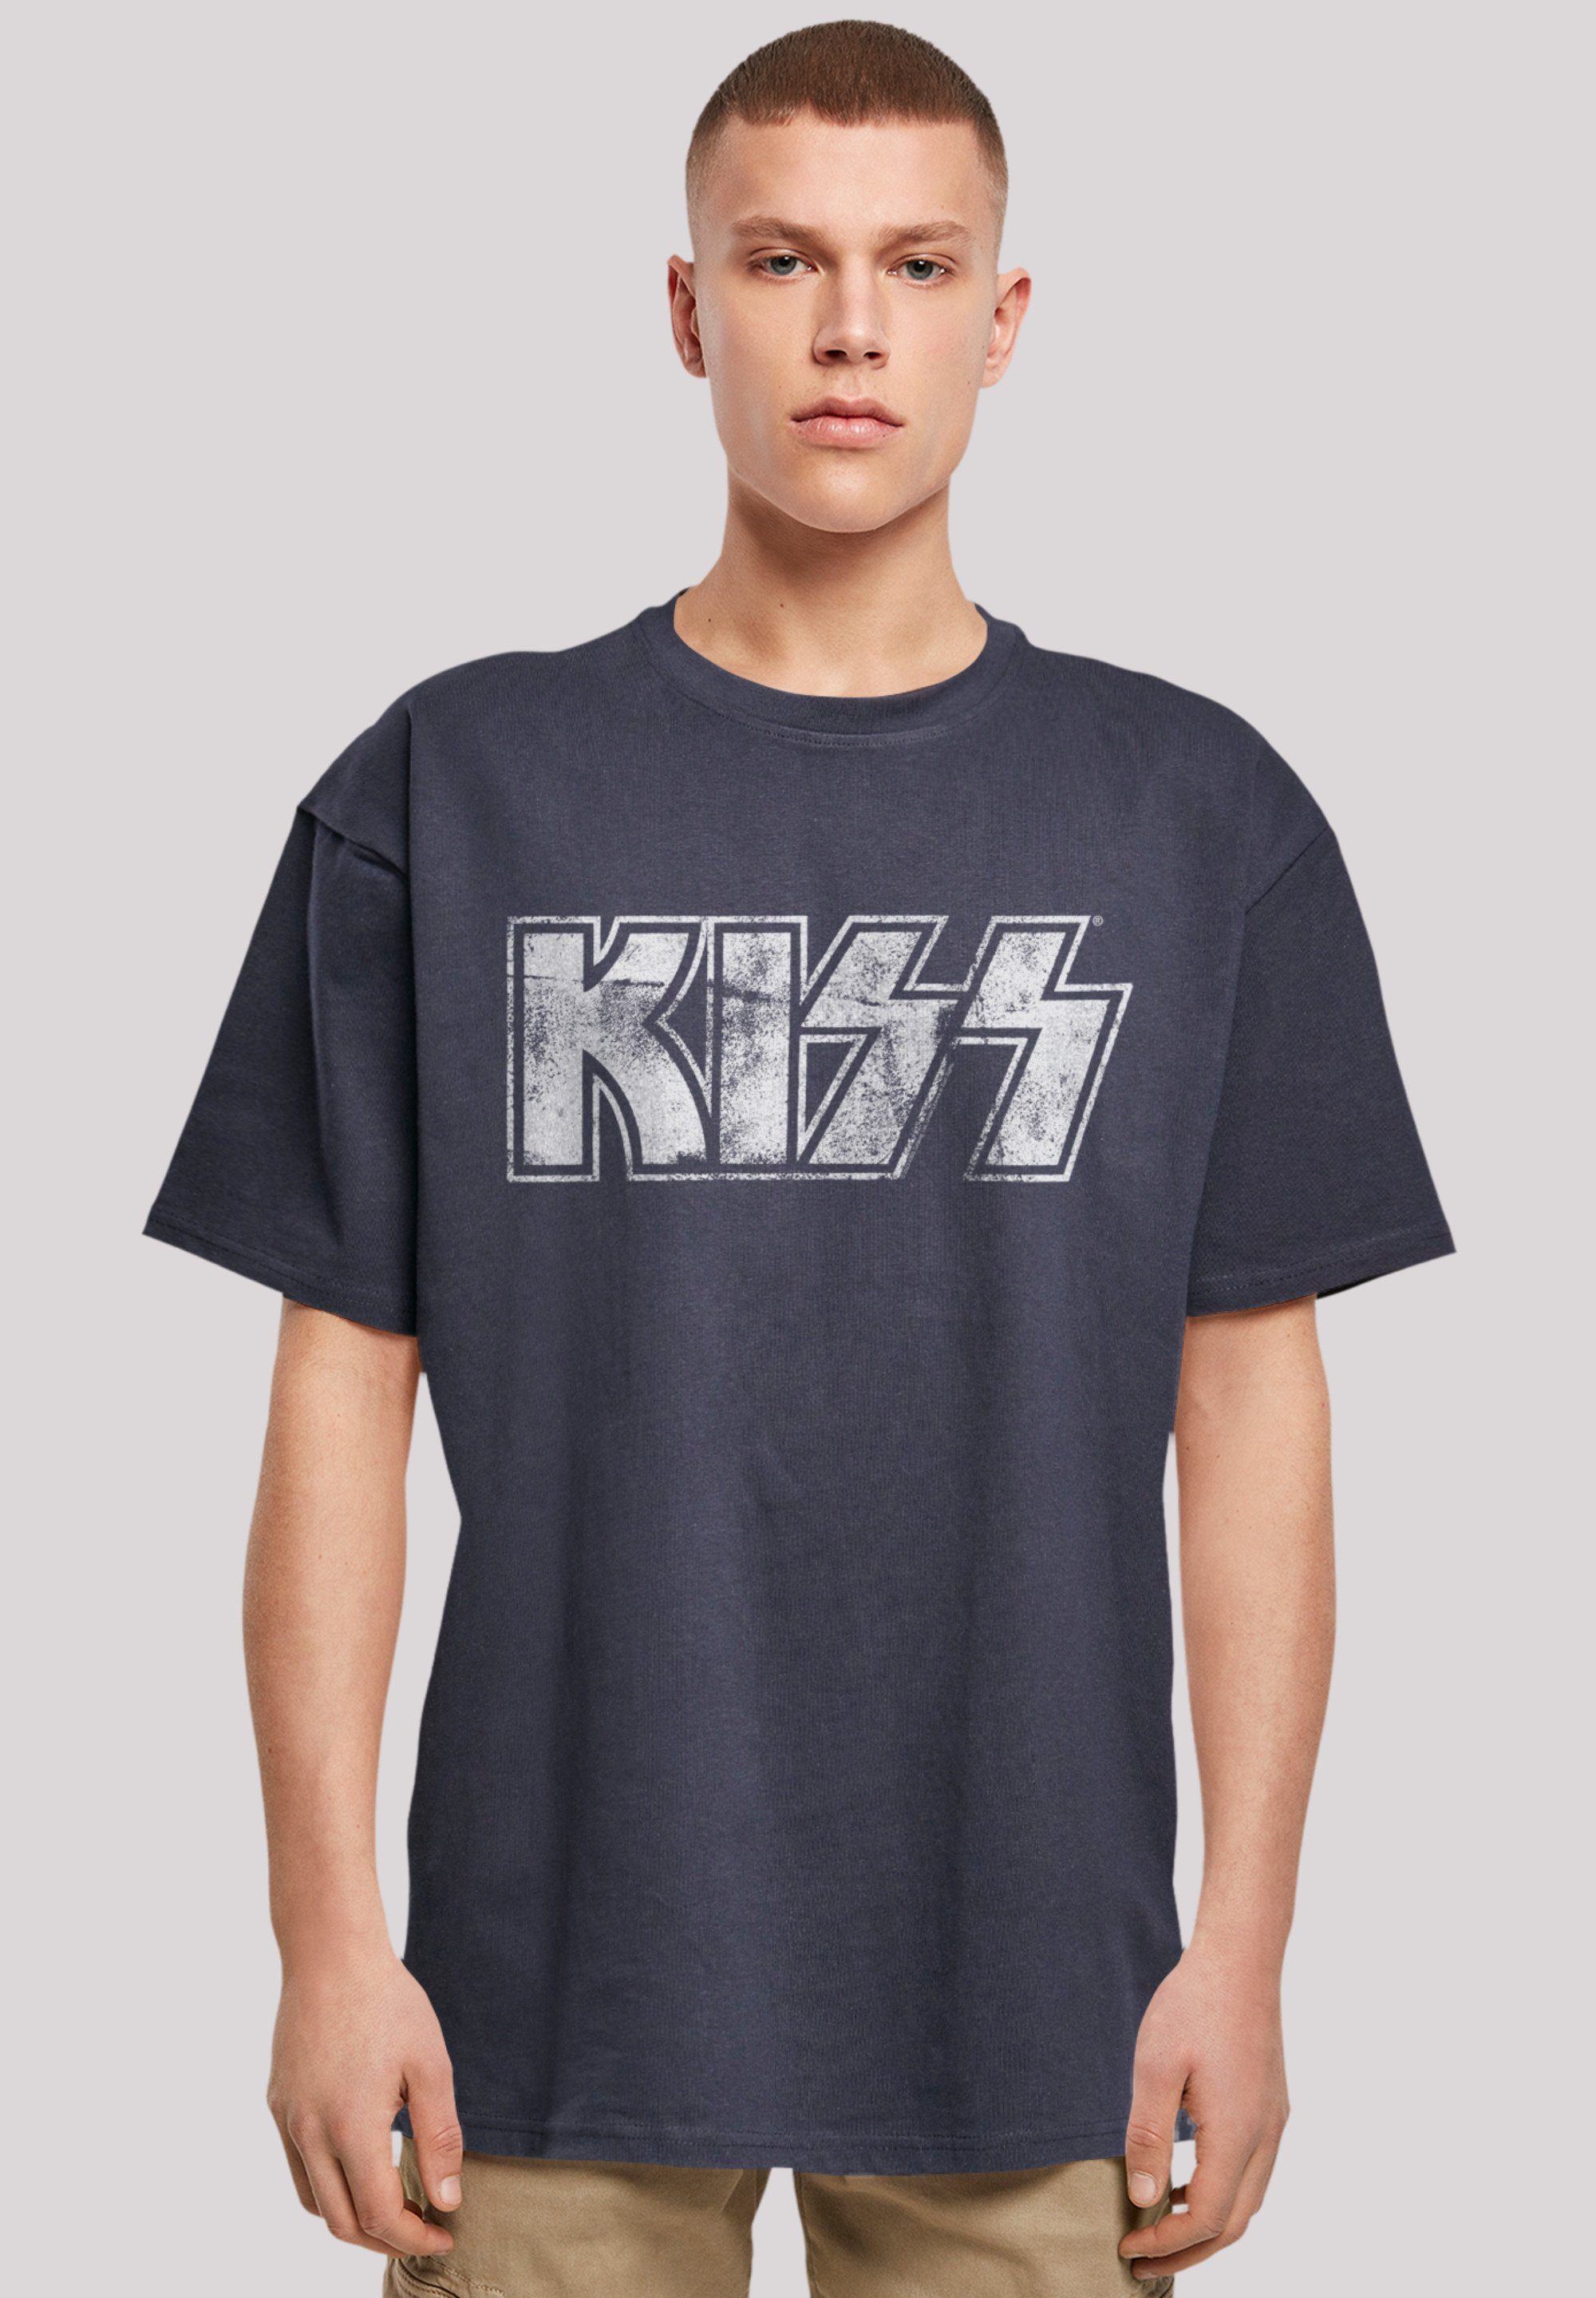 Rock Logo Off Vintage Band Musik, F4NT4STIC Rock Qualität, T-Shirt navy Kiss By Premium